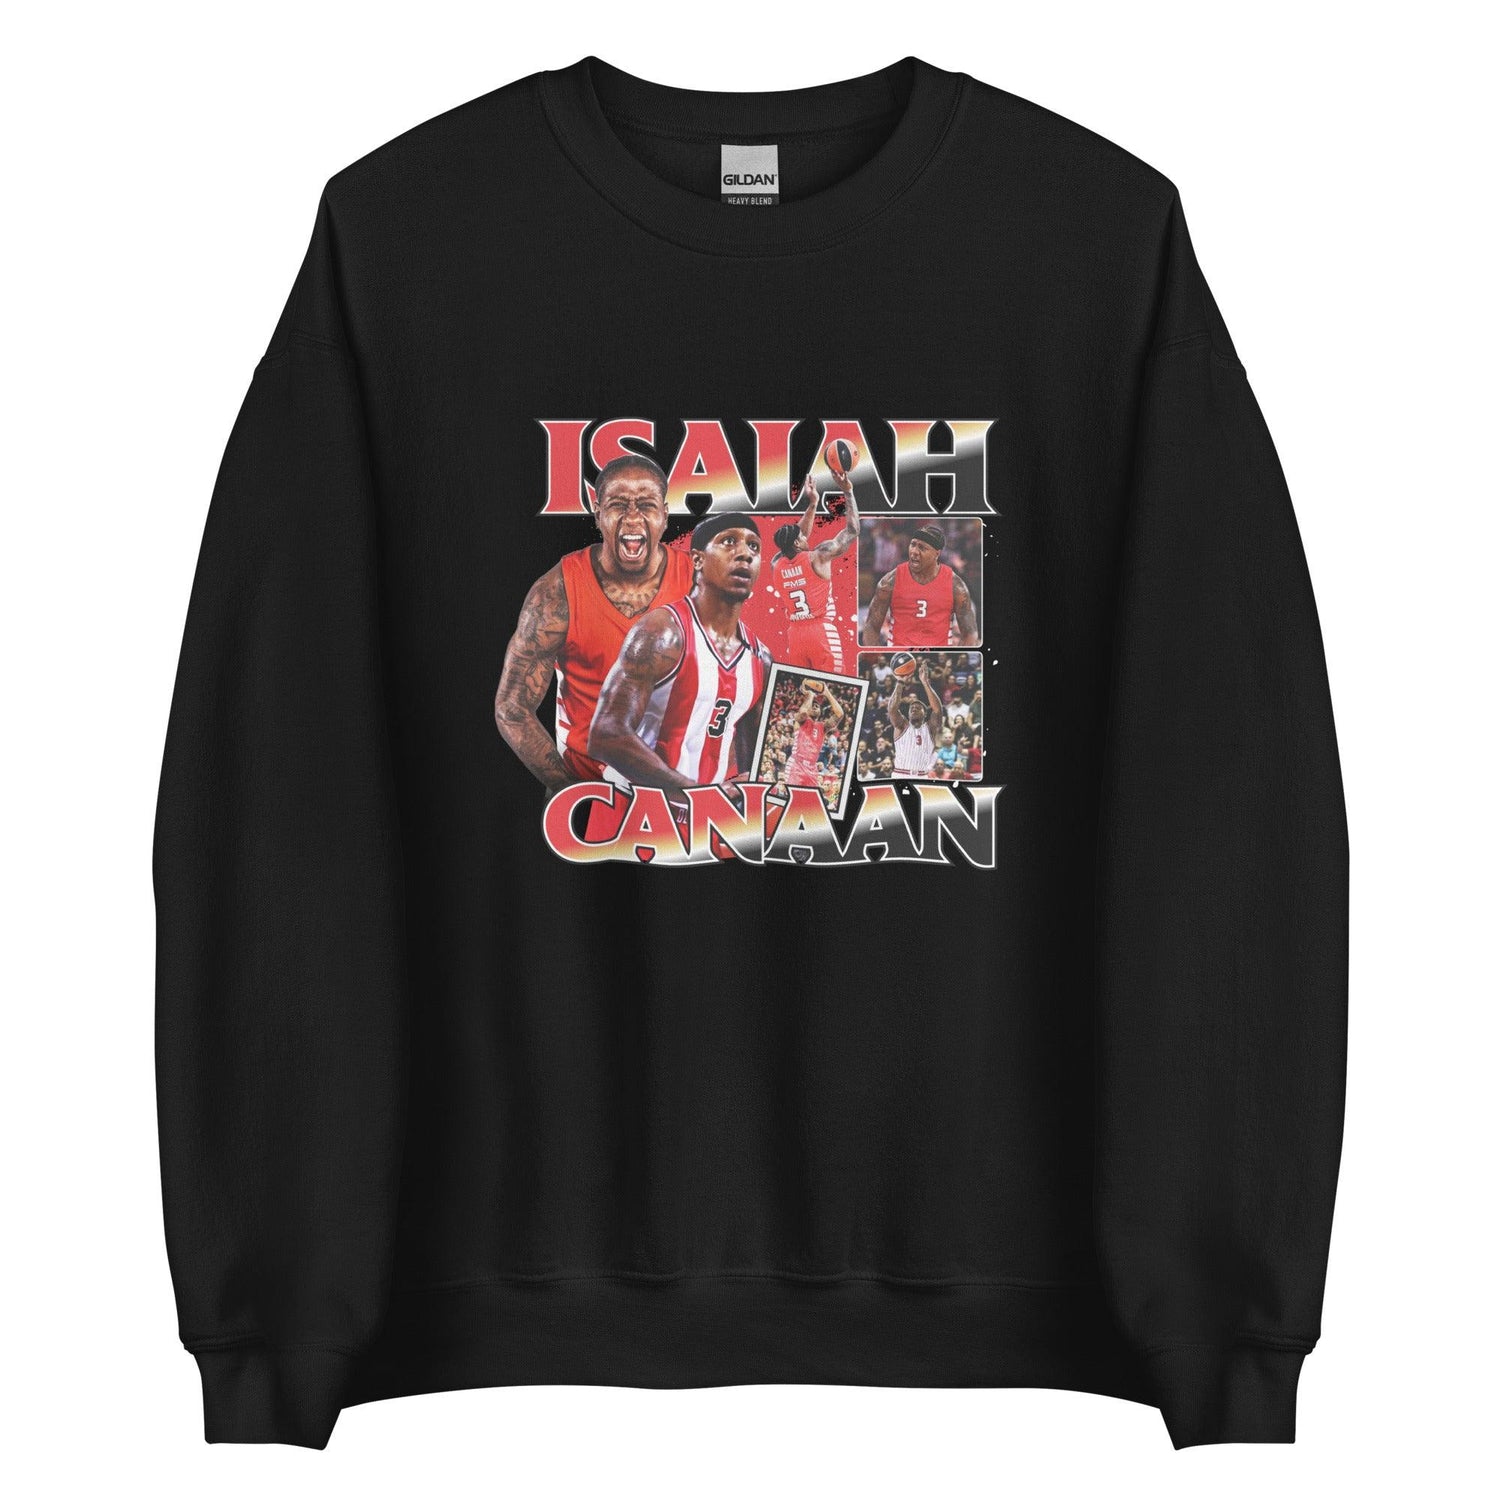 Isaiah Canaan "Vintage" Sweatshirt - Fan Arch